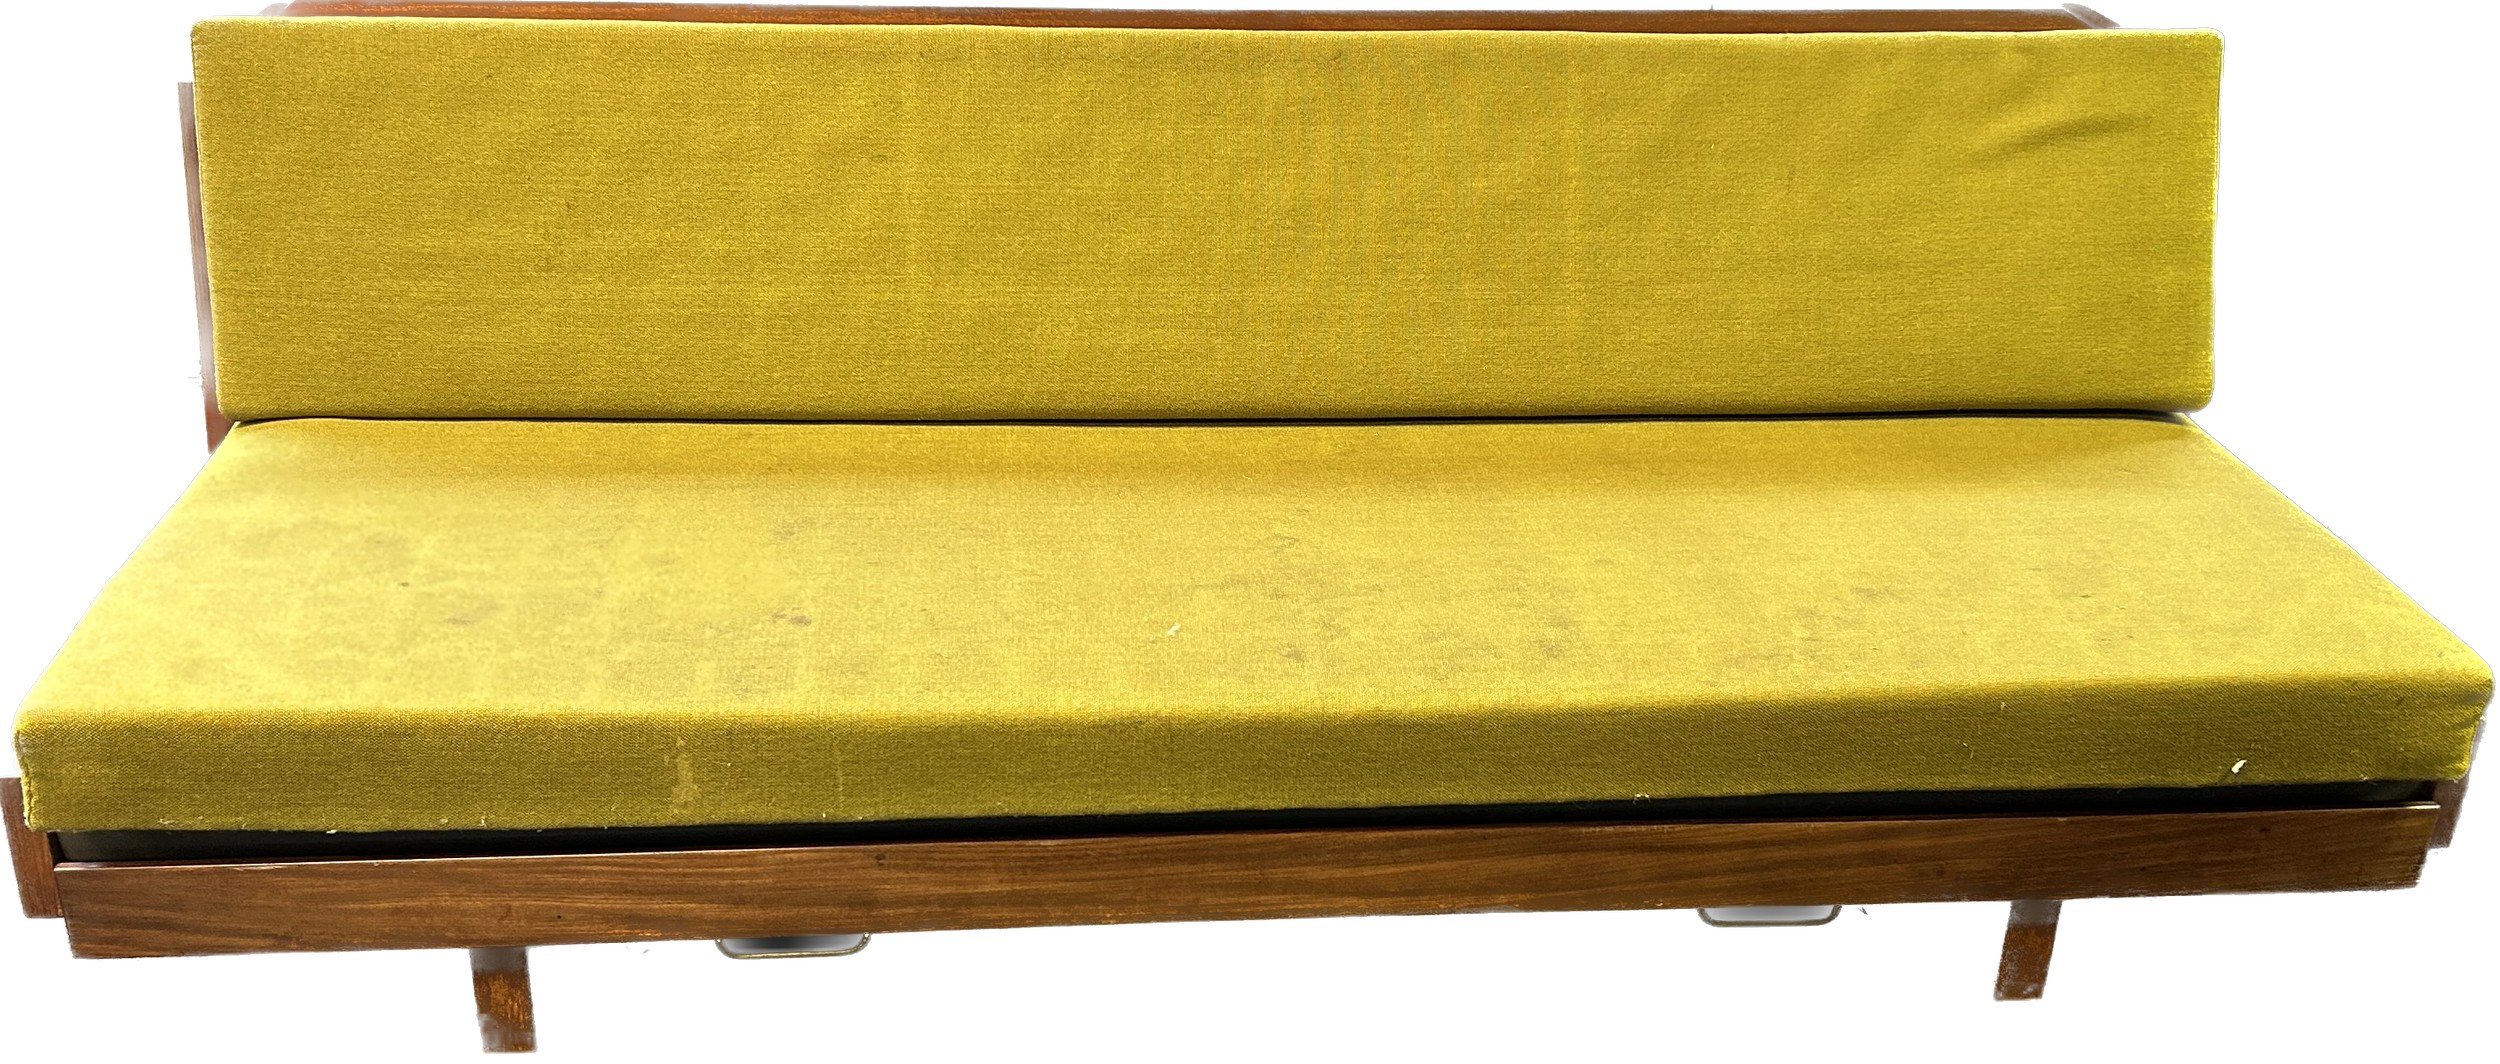 Danish Mid century sofa bed